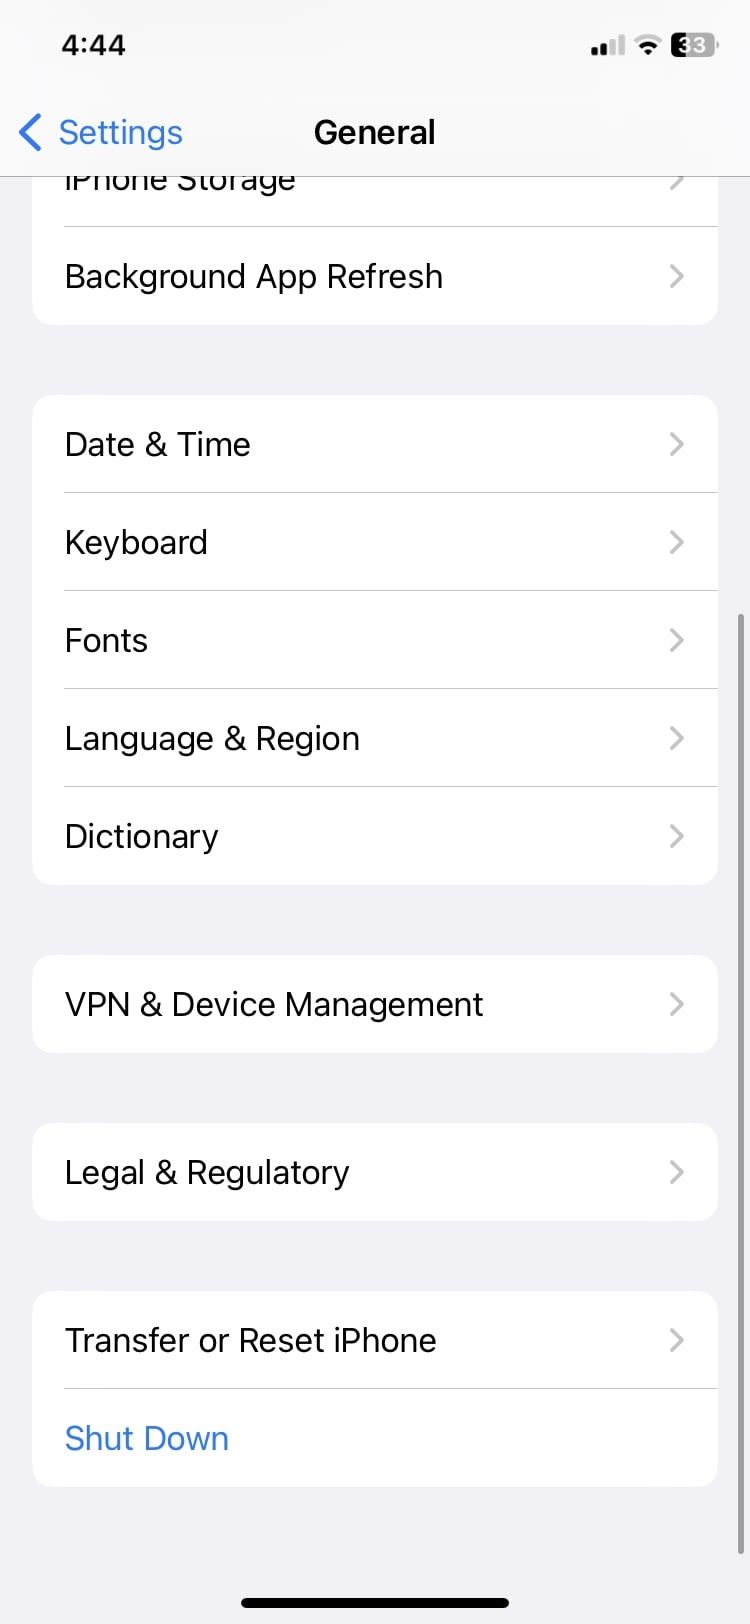 transfer or reset iPhone in settings